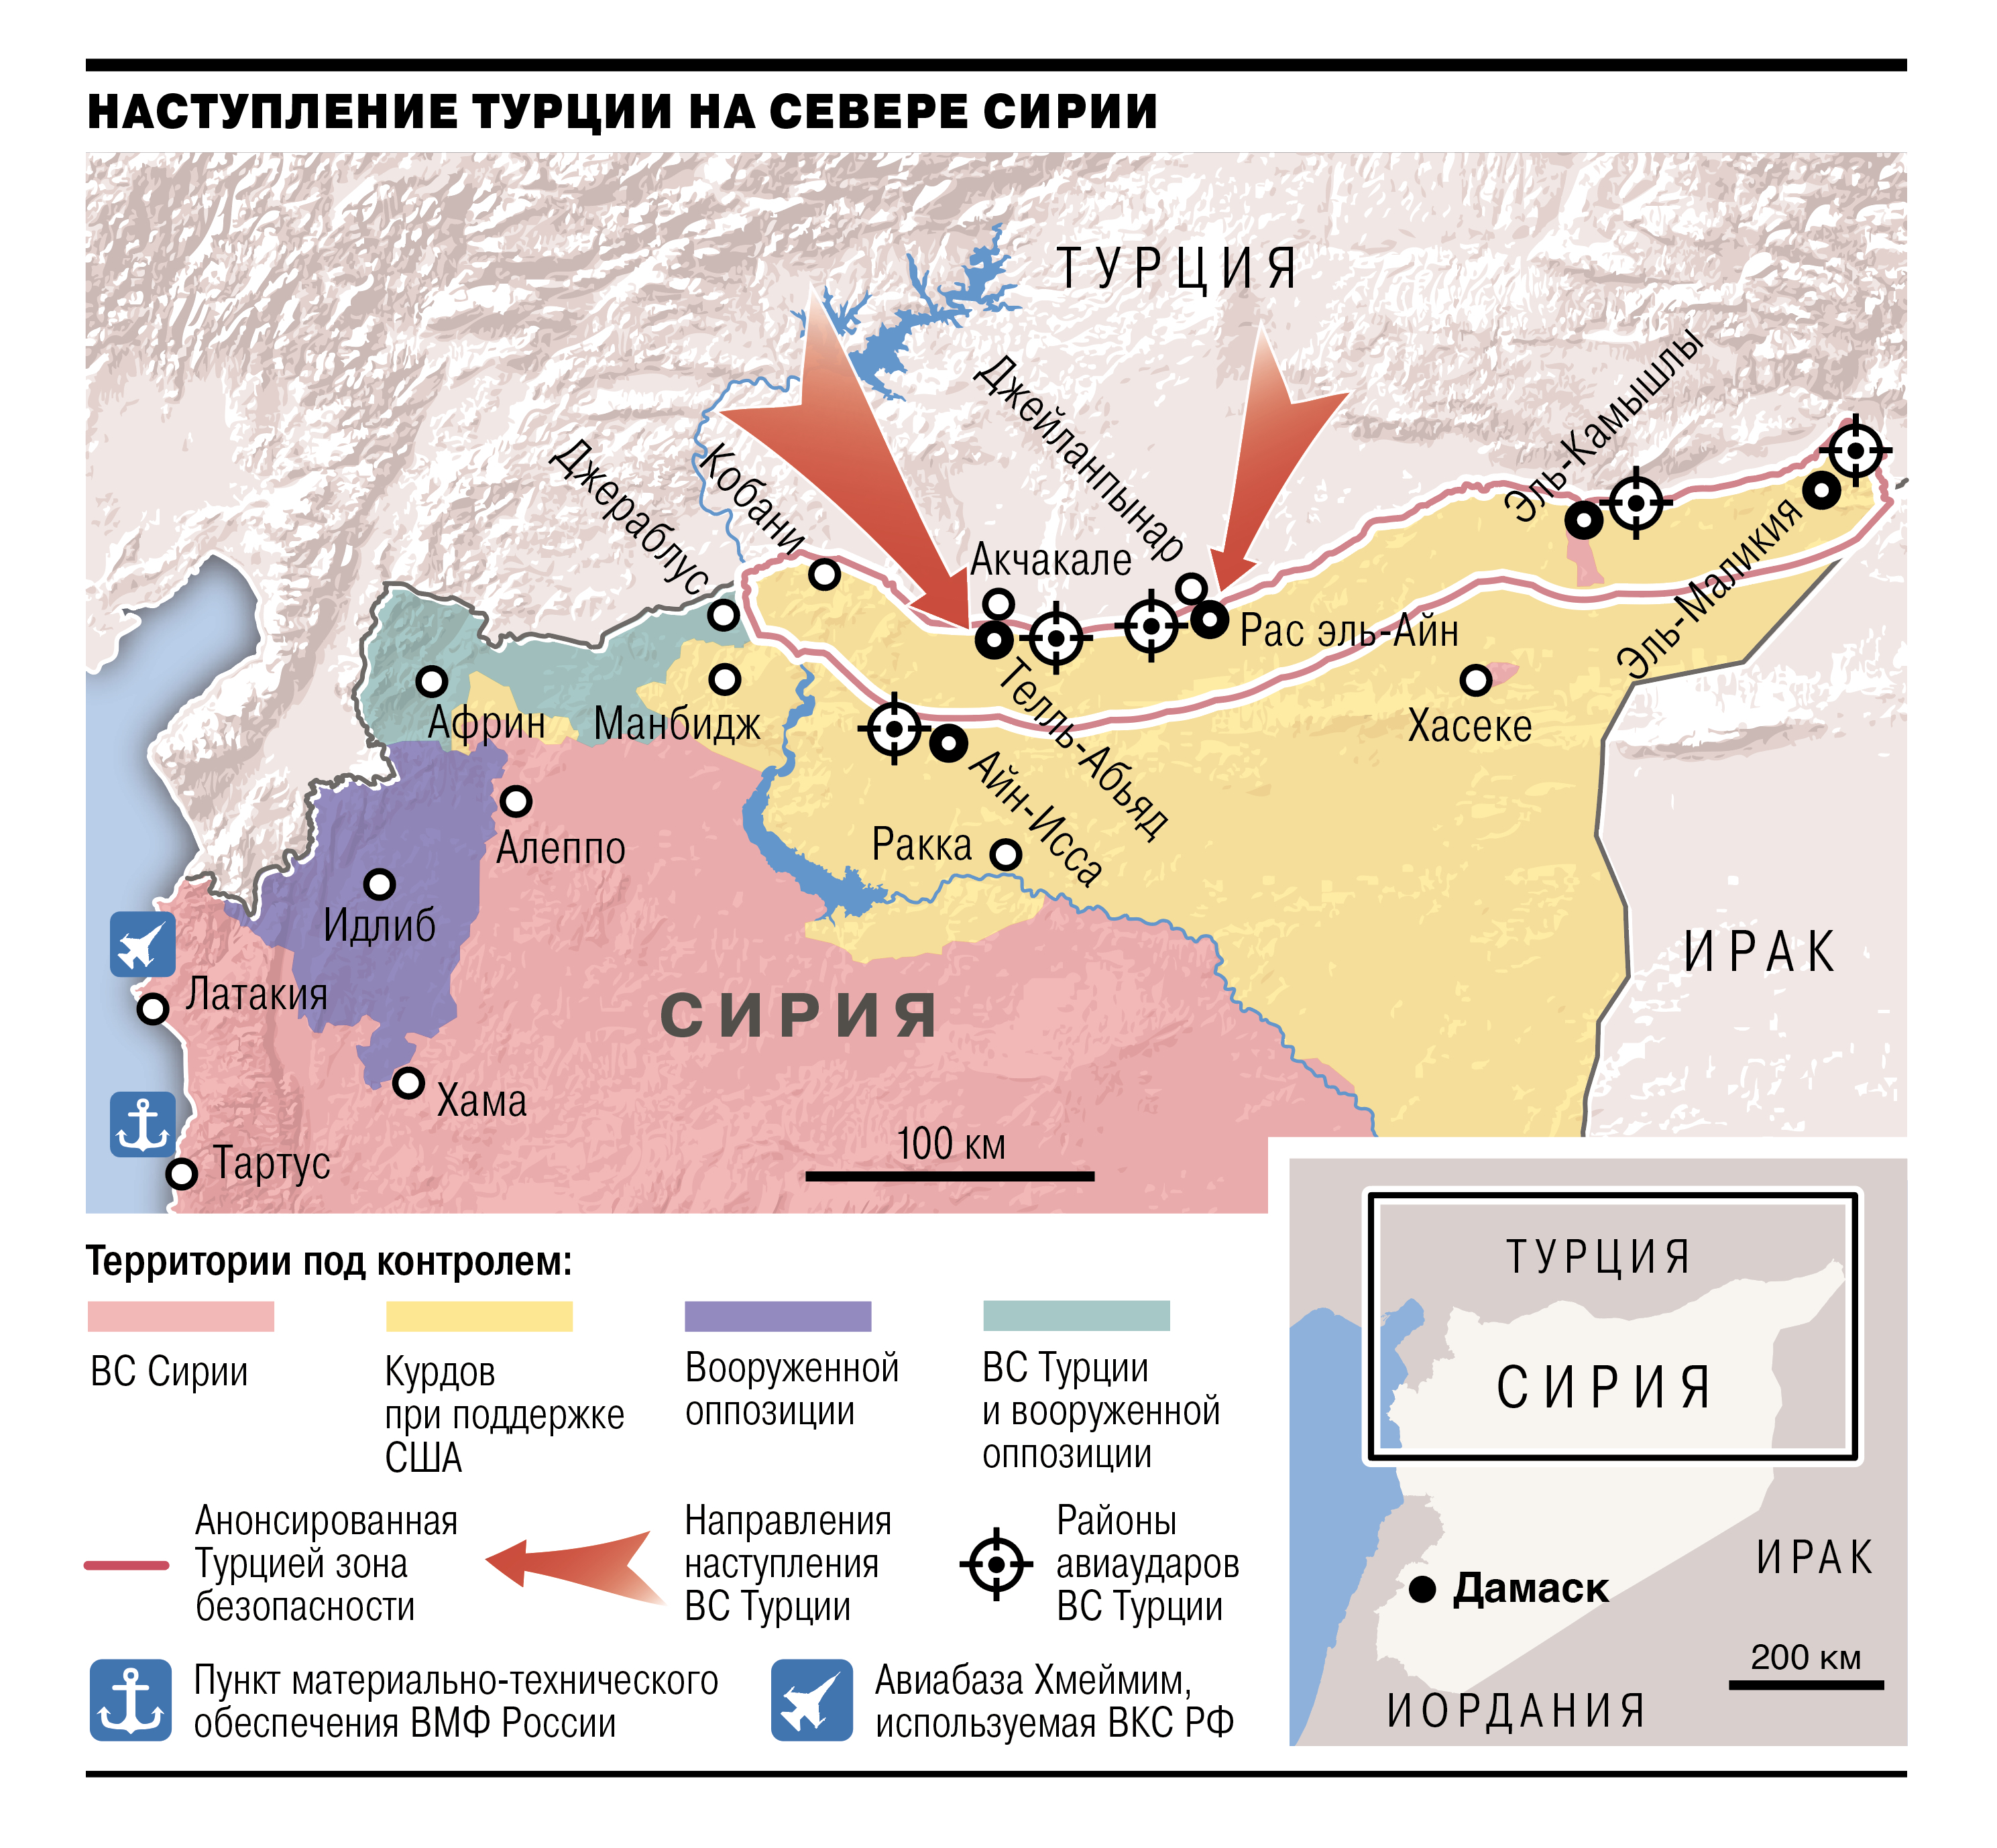 Турецкий план по украине